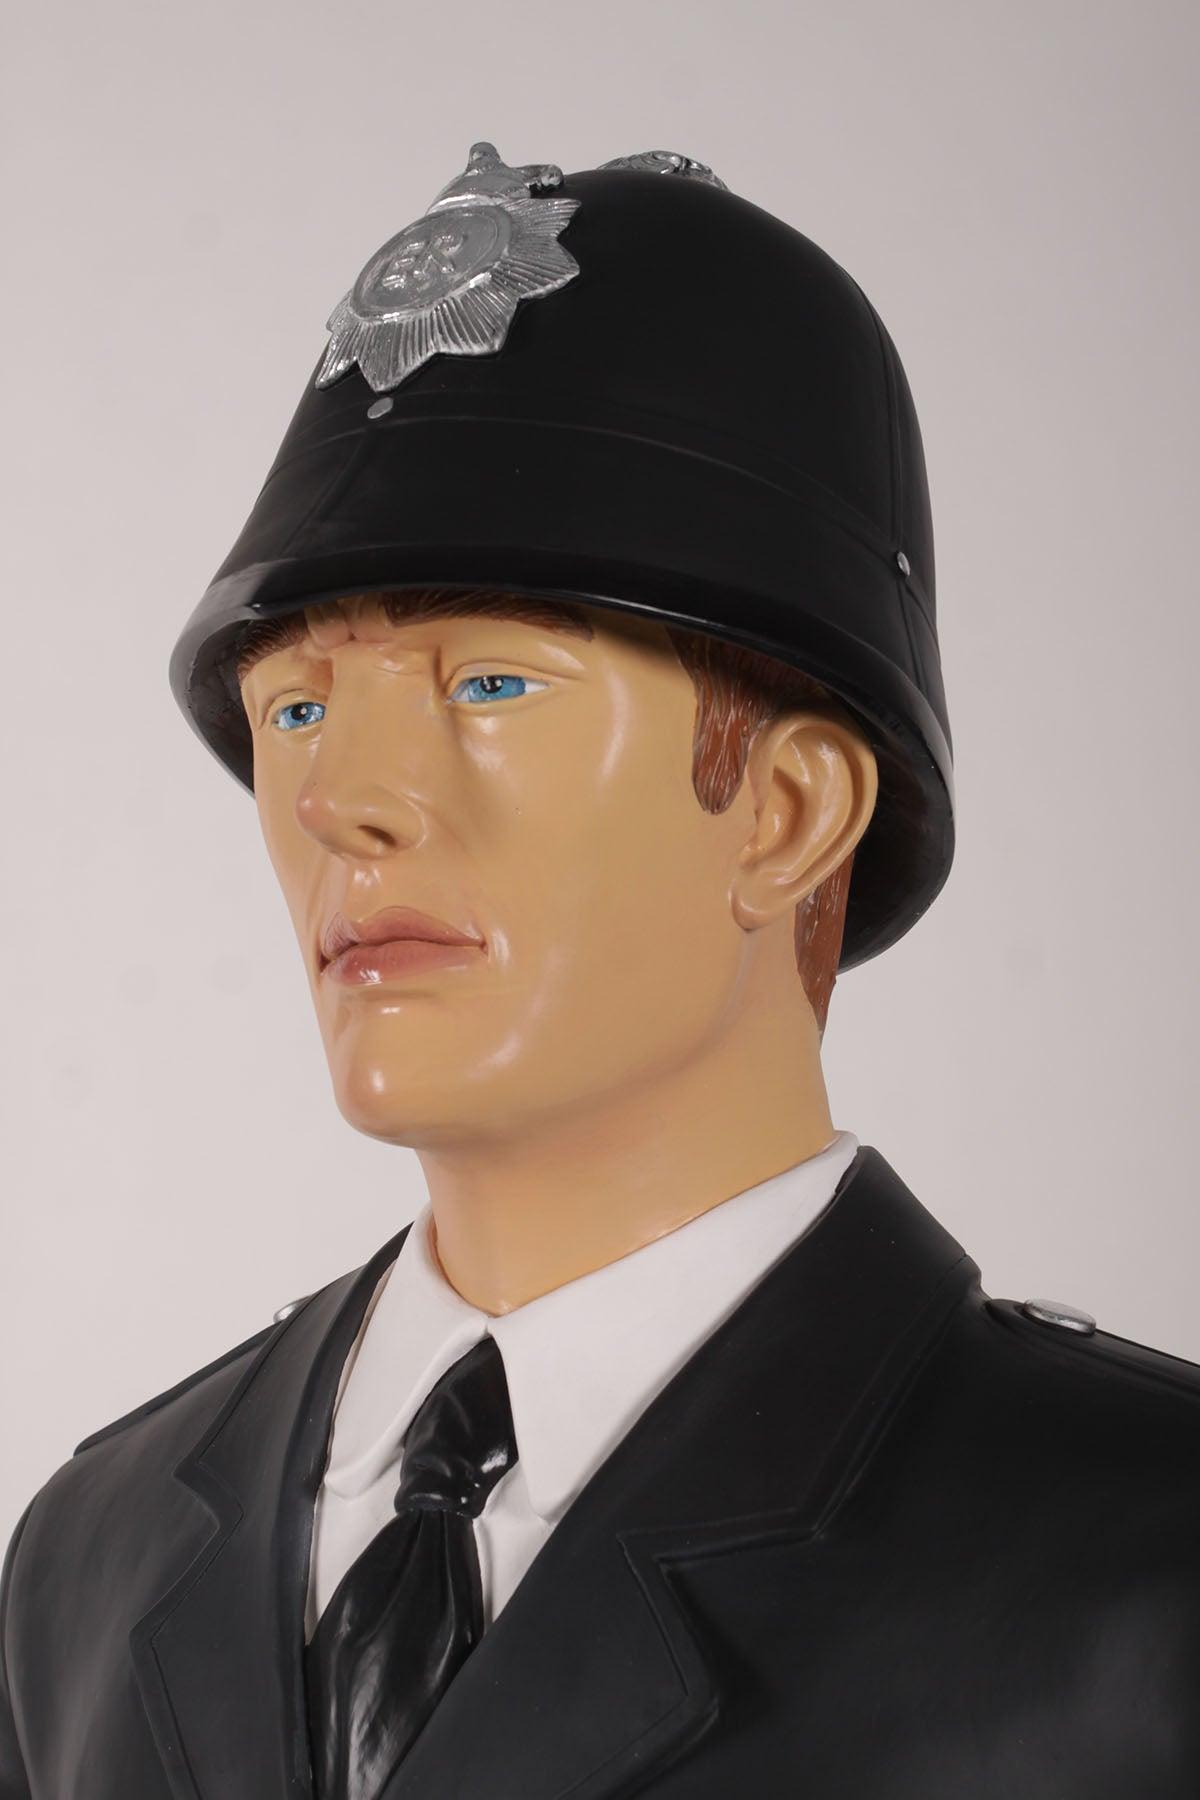 Policeman Bobby Life Size Movie Prop Decor Statue